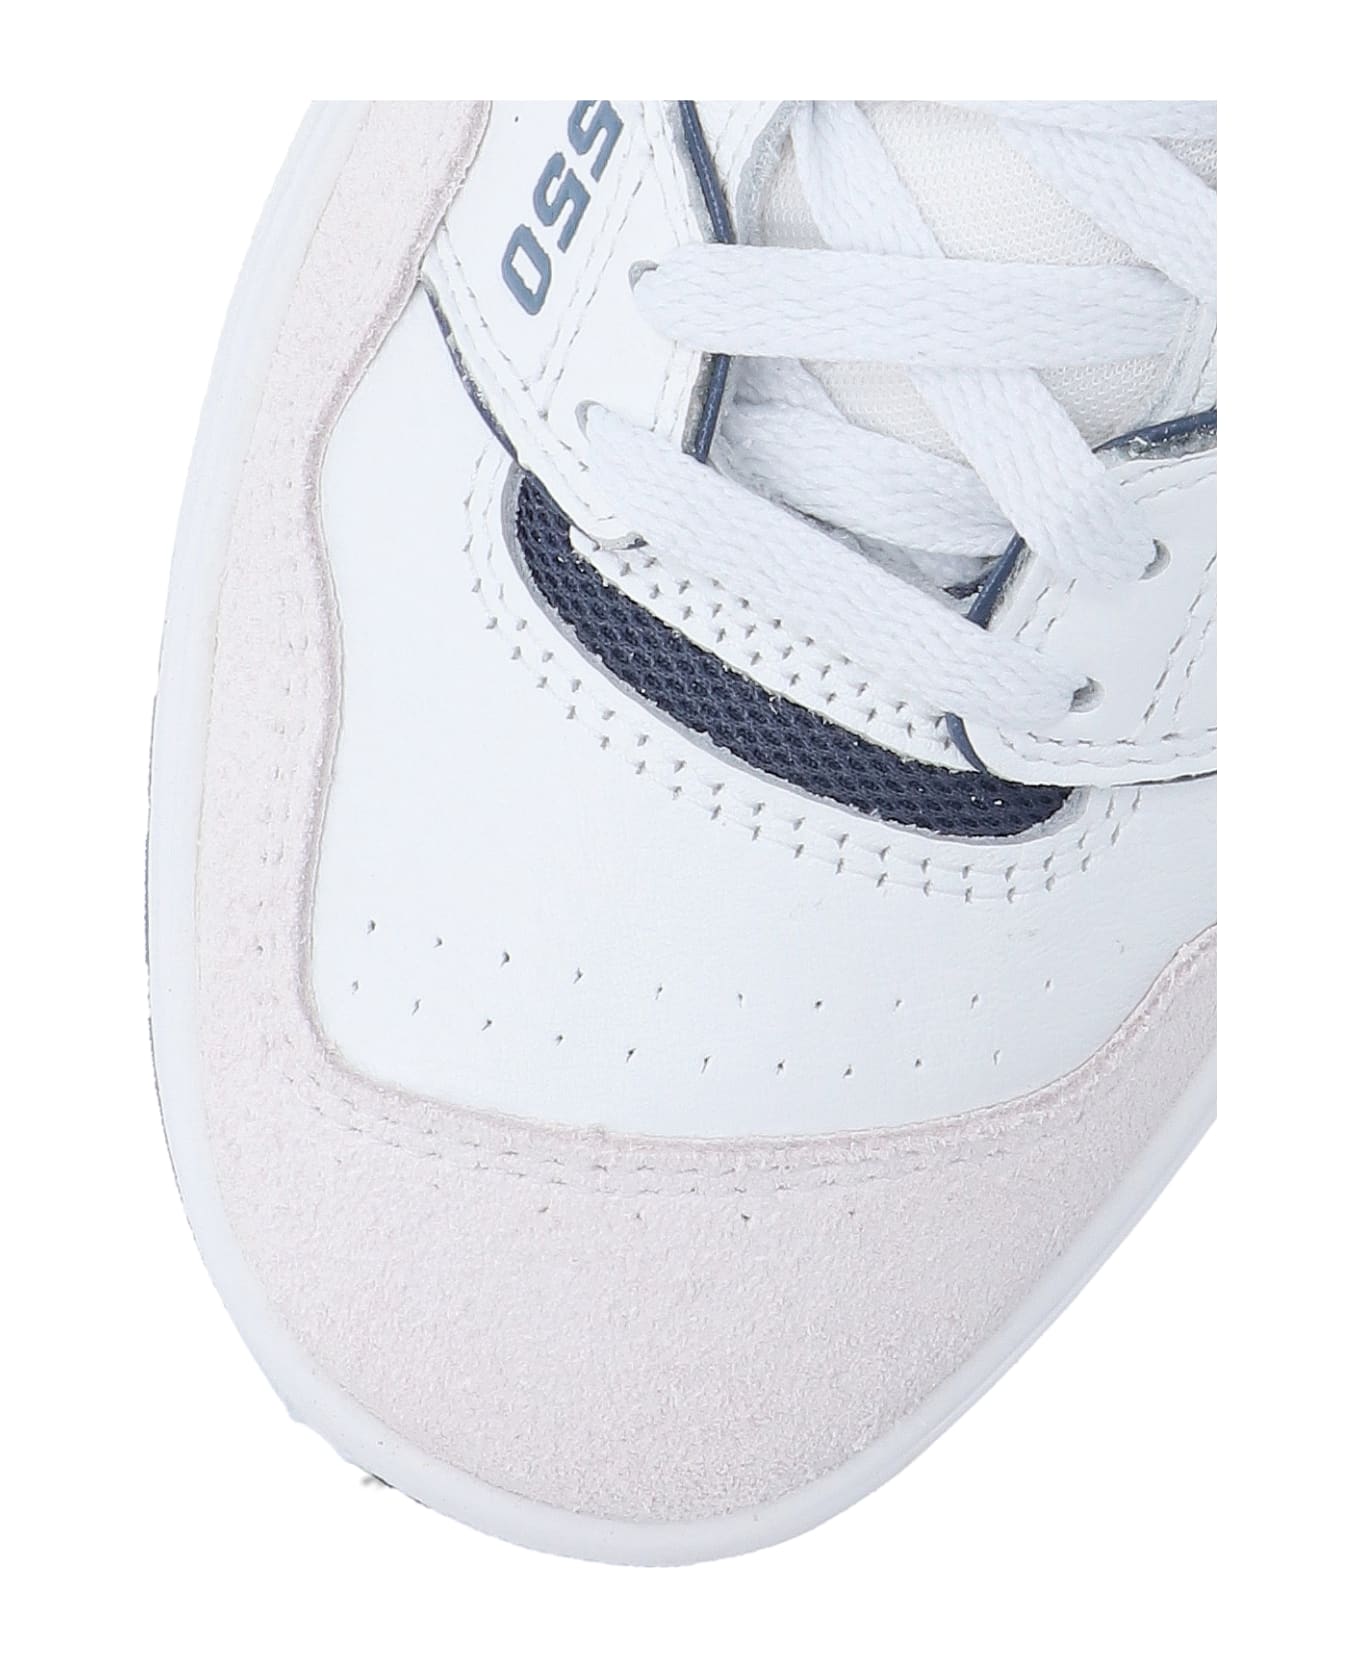 New Balance 550 Sneakers - White スニーカー